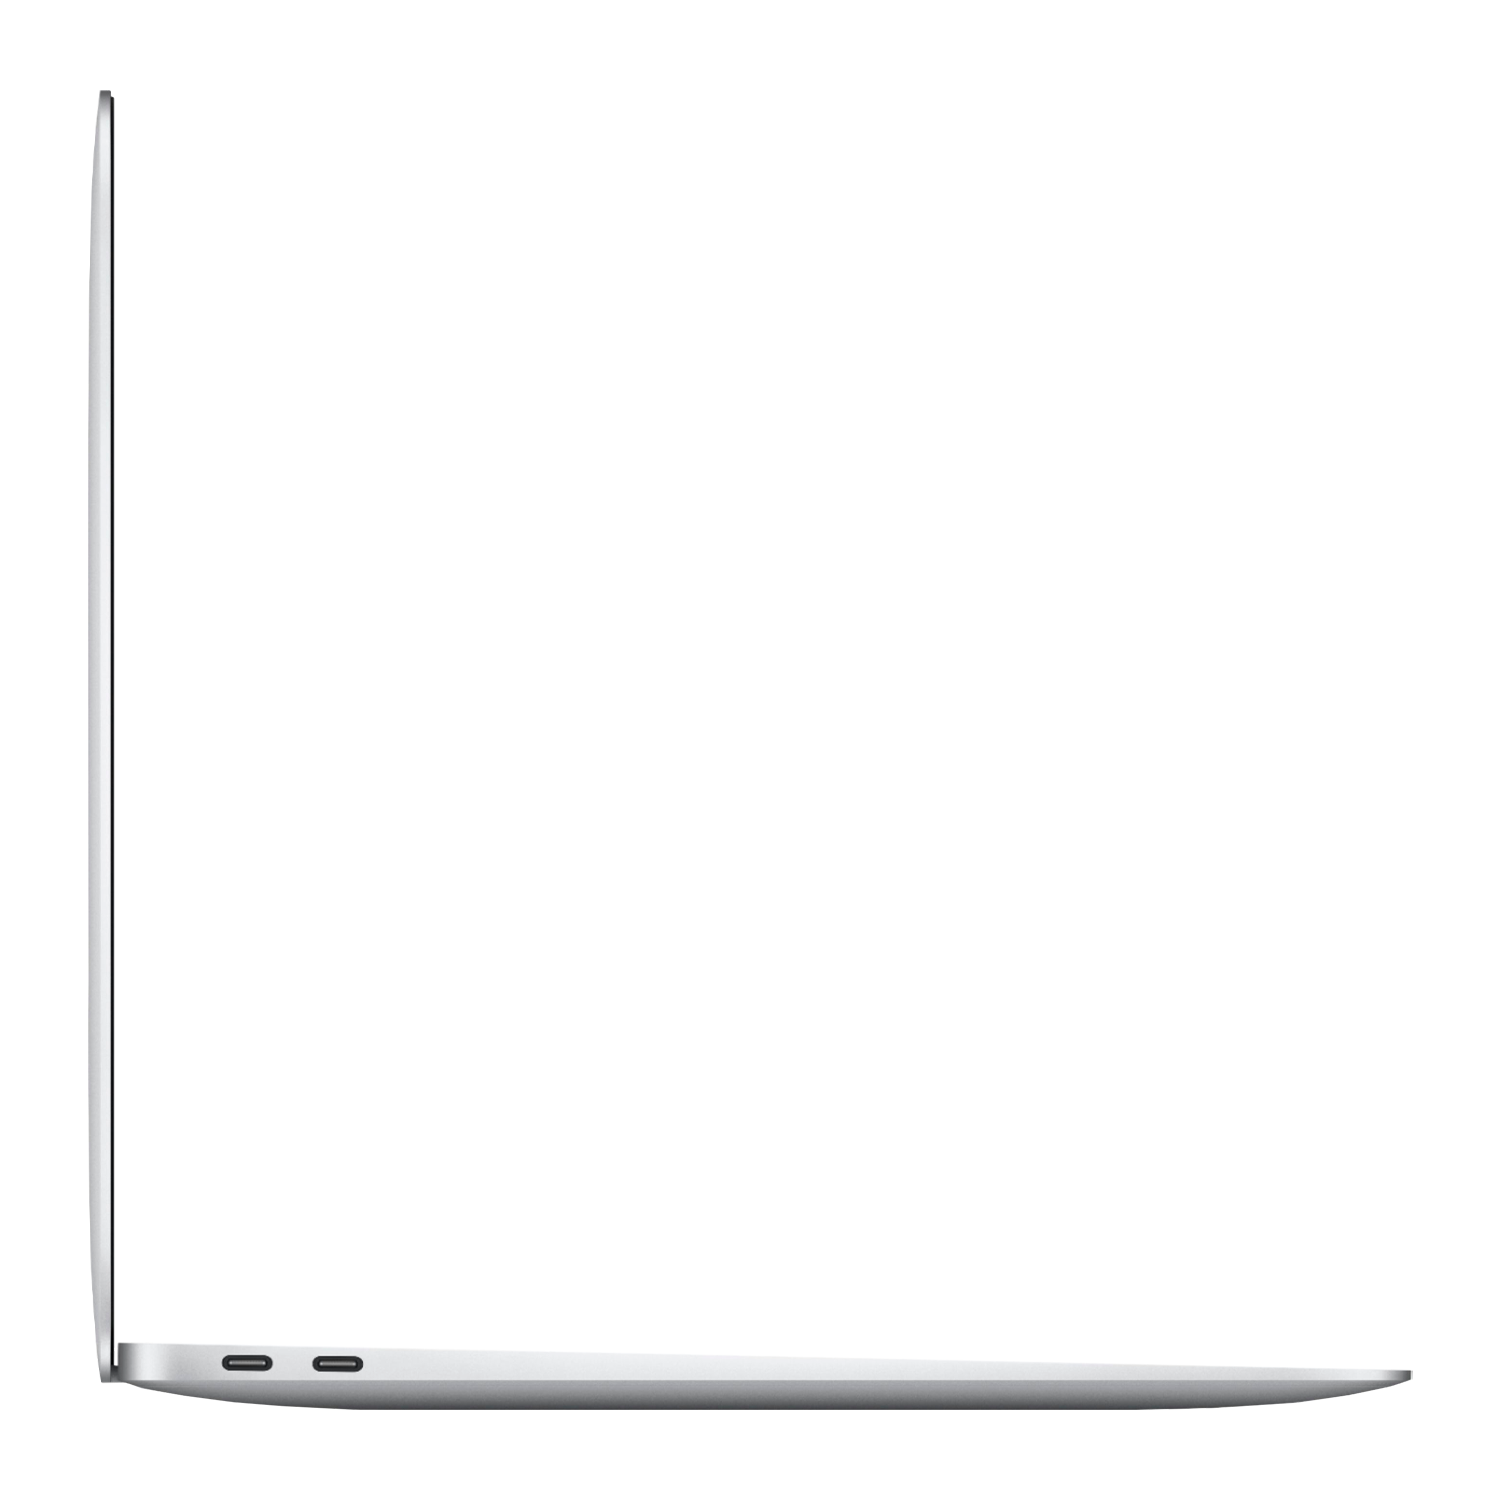 Apple Macbook Air 2020 MGN93BZ/A 13.3" Chip M1 256GB SSD 8GB RAM - Prata